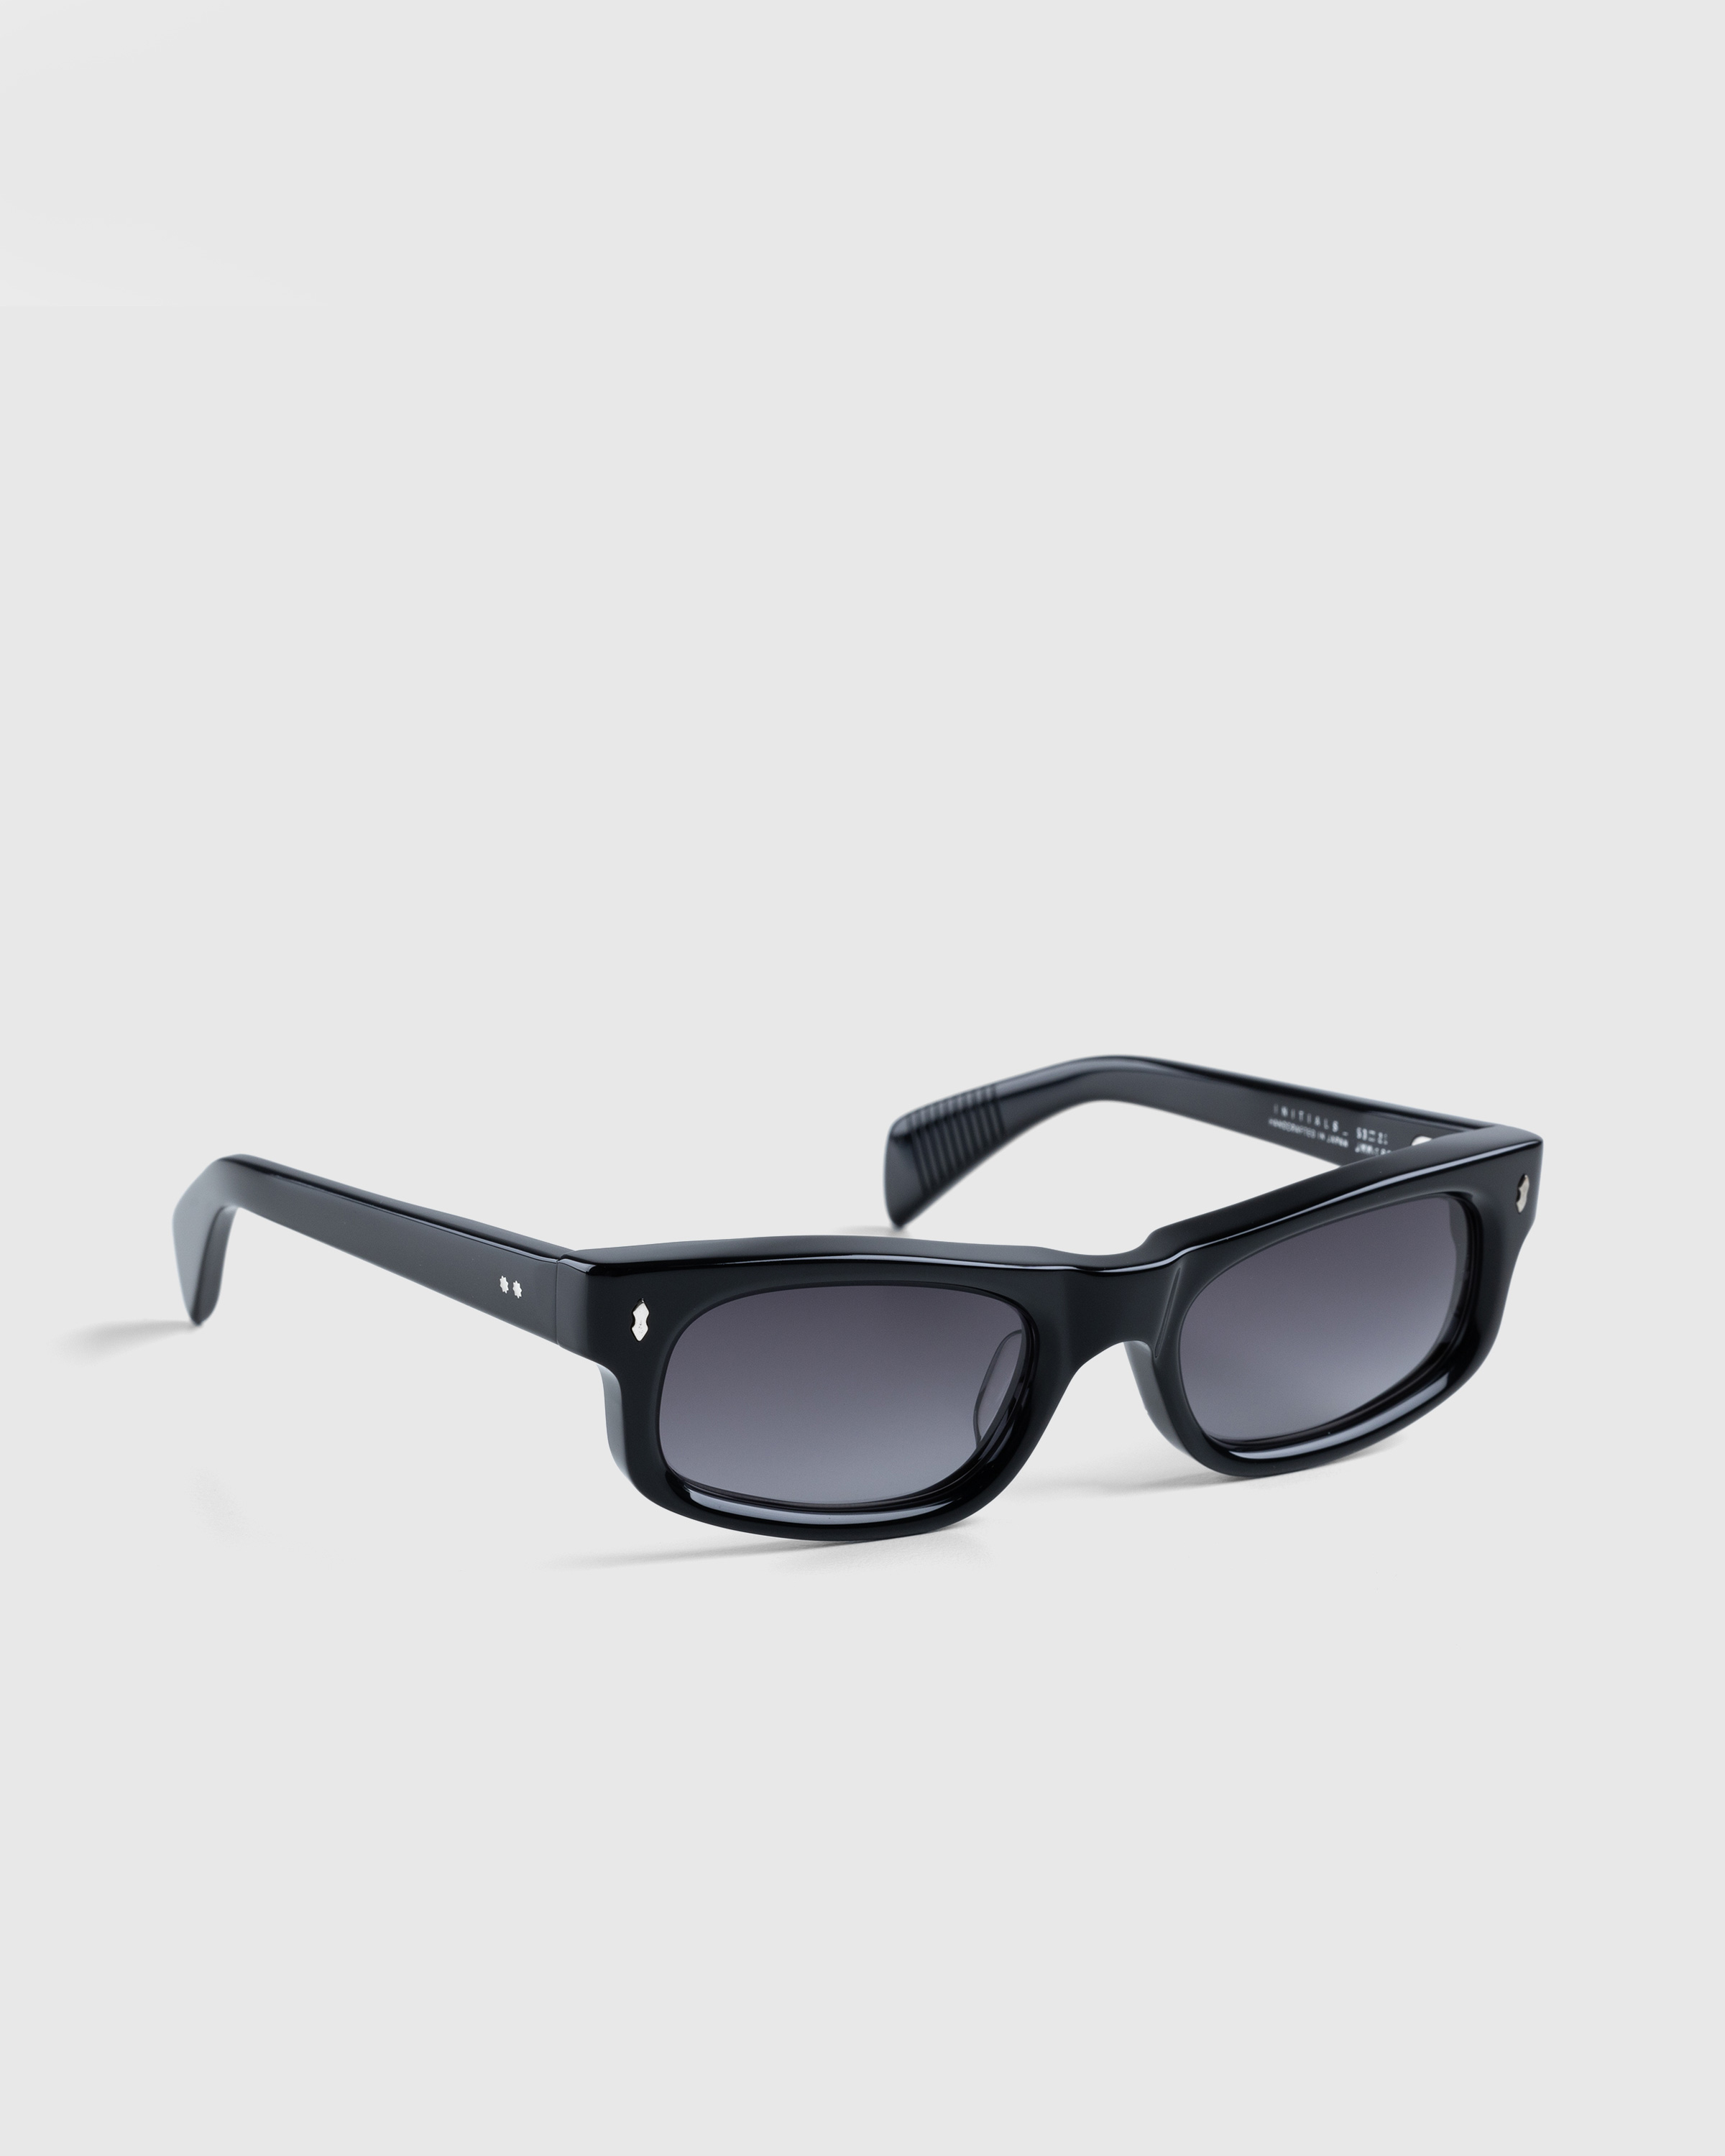 Jacques Marie Mage – Initials Black - Sunglasses - Black - Image 3